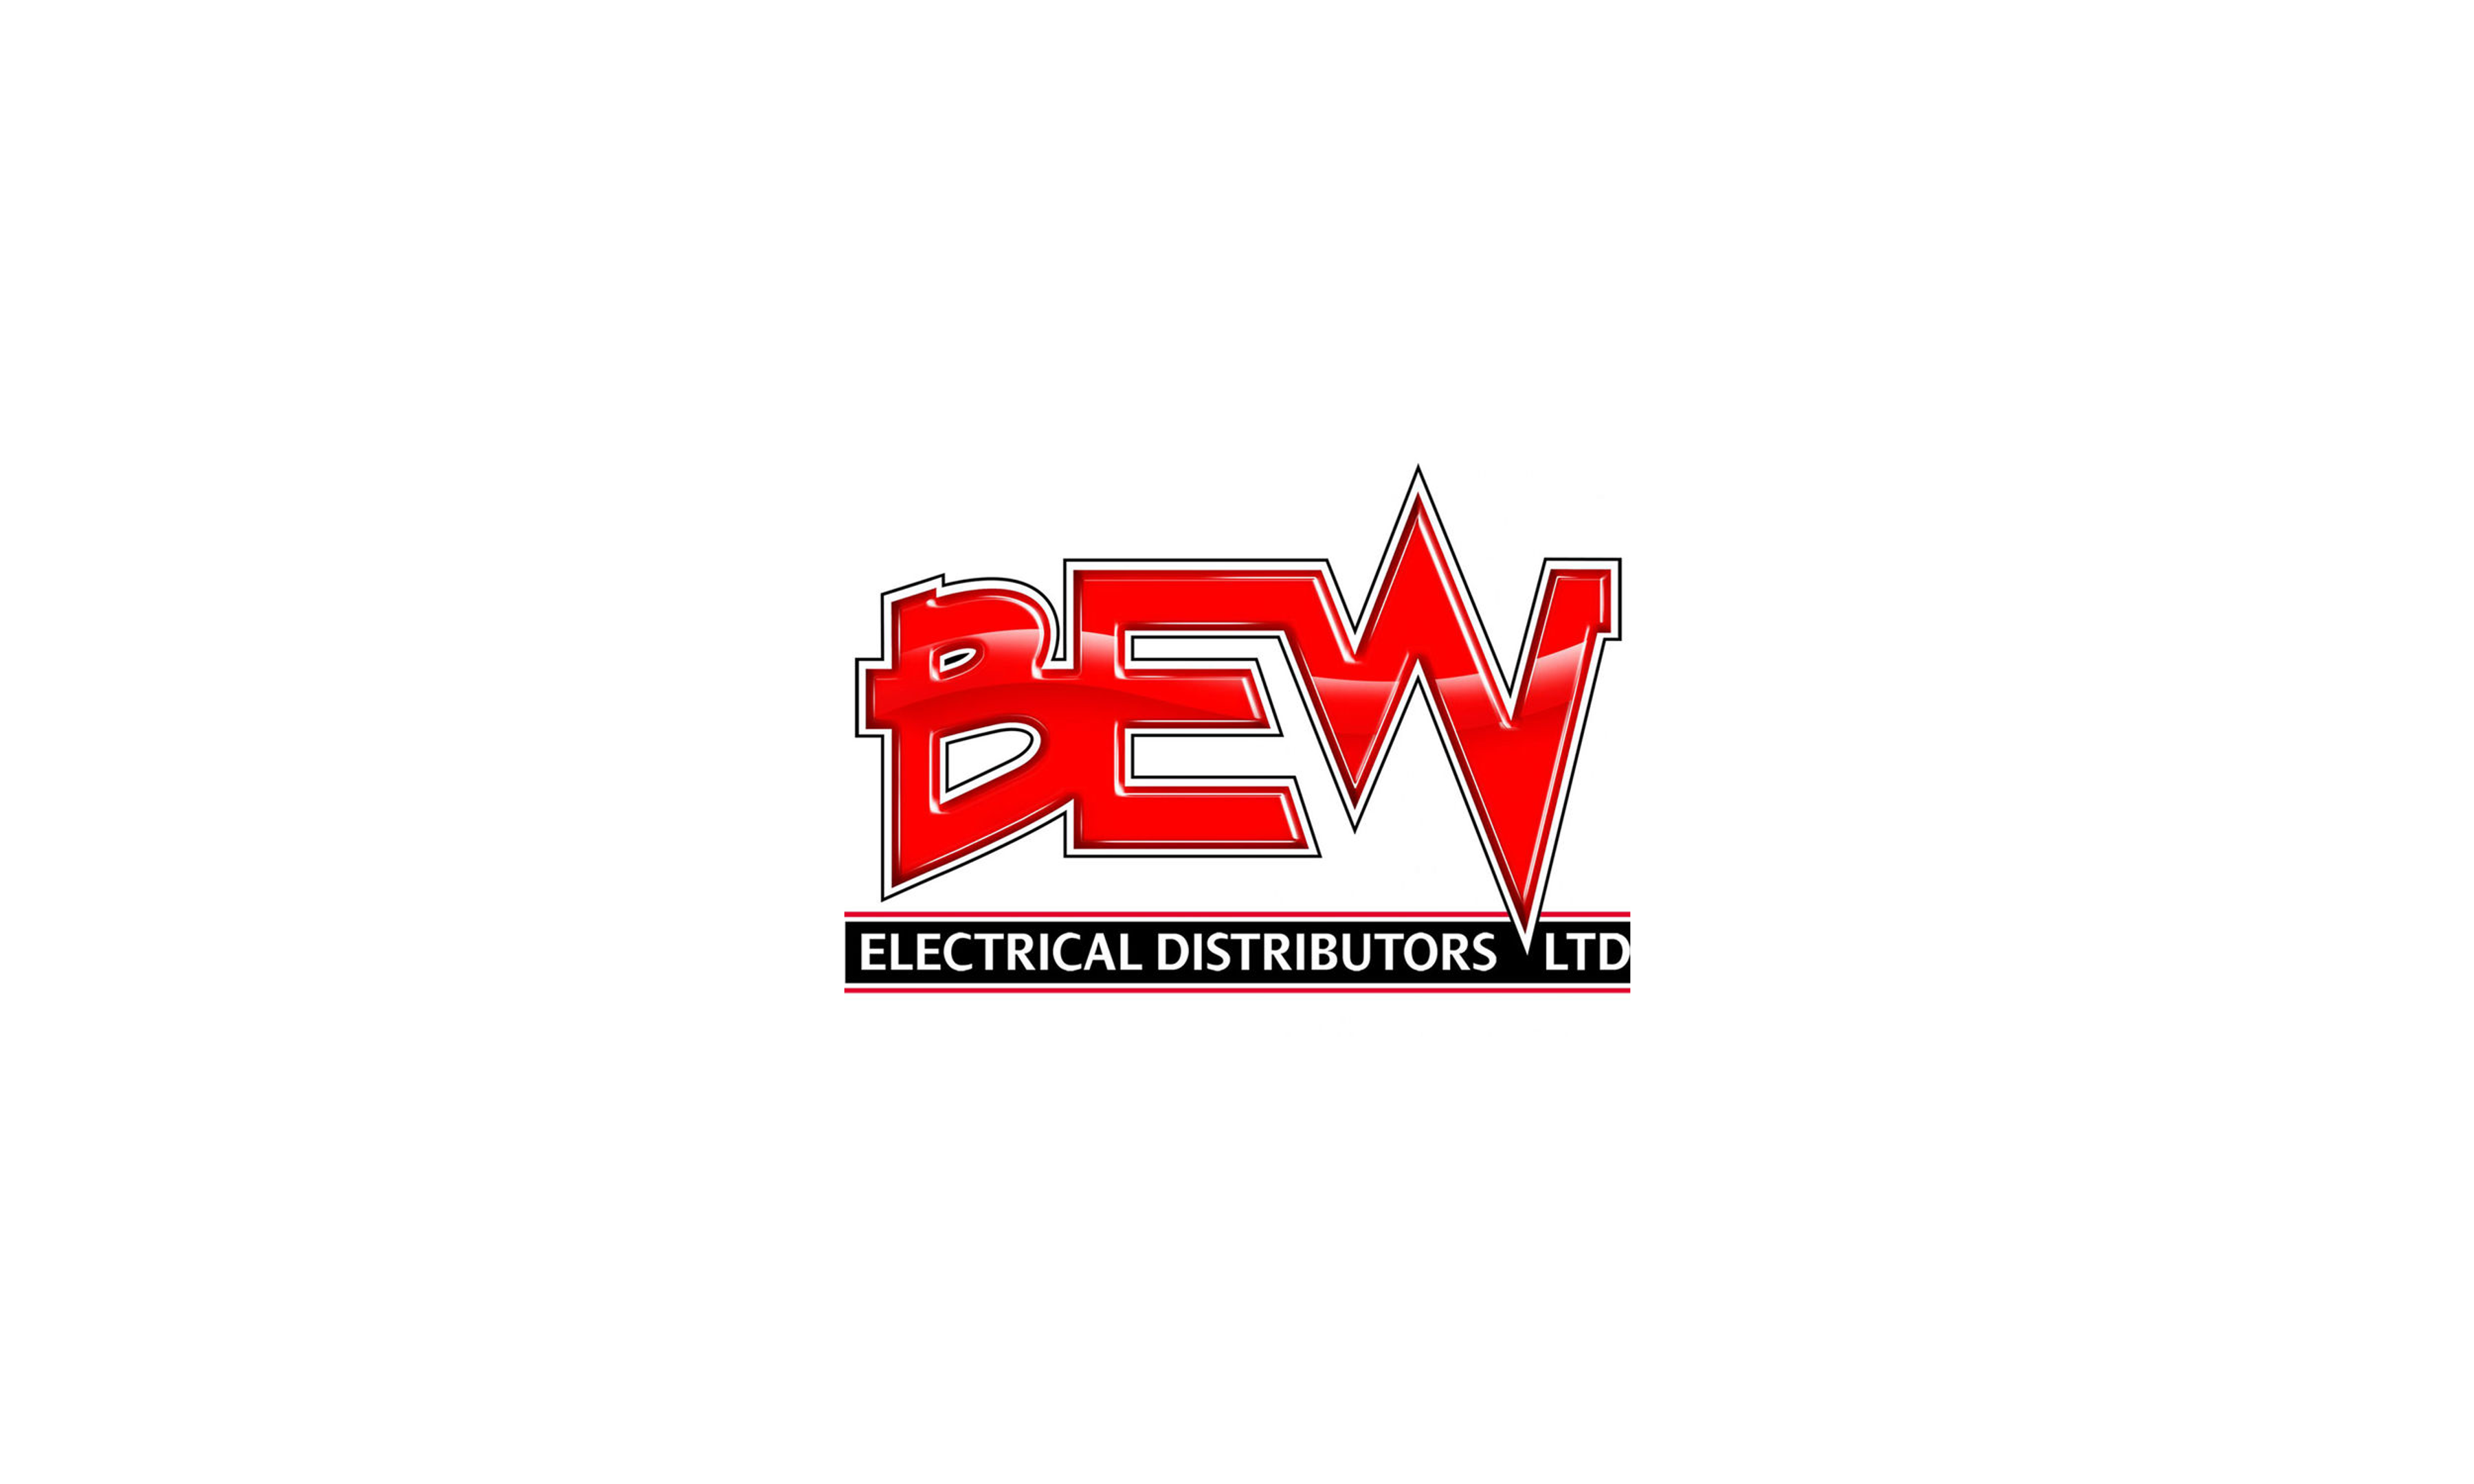 BEW Electrical Logo